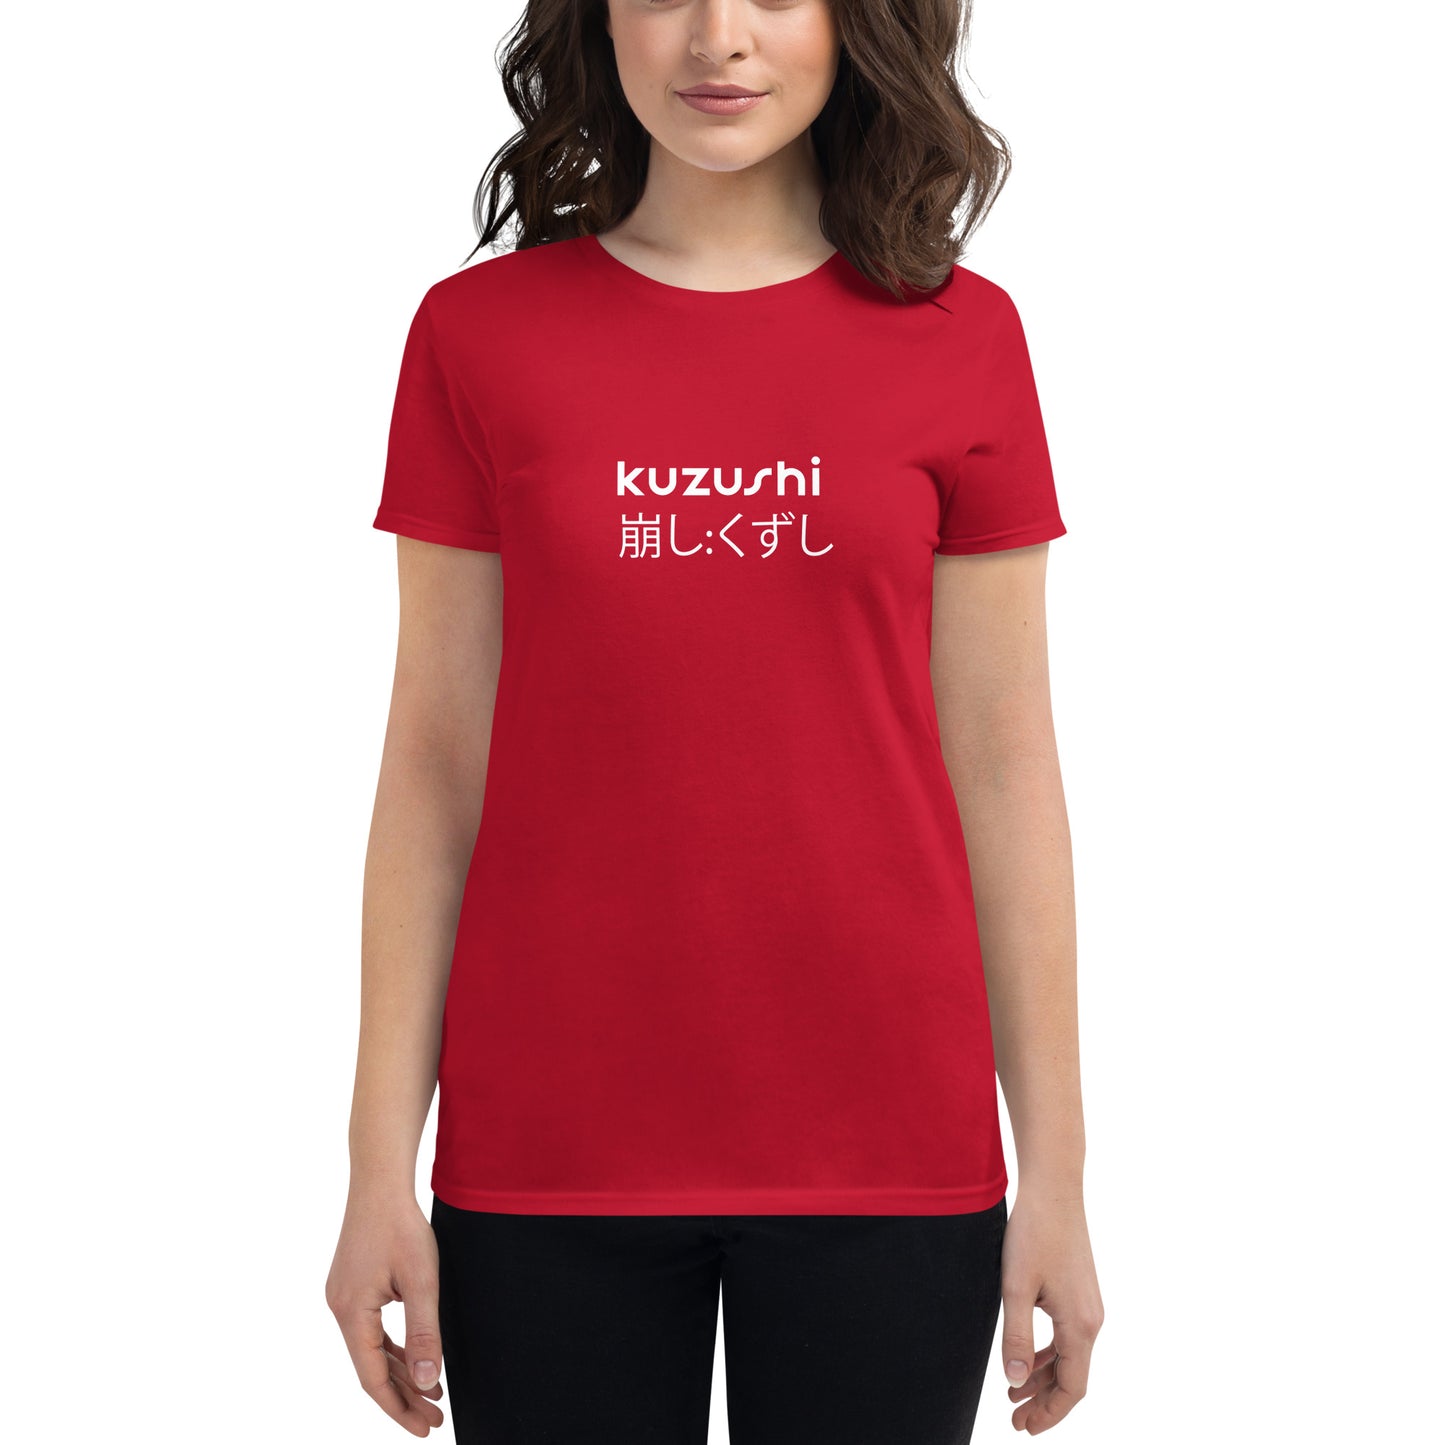 Women's kuzushi dark soft pre-shrunk short sleeve t-shirt